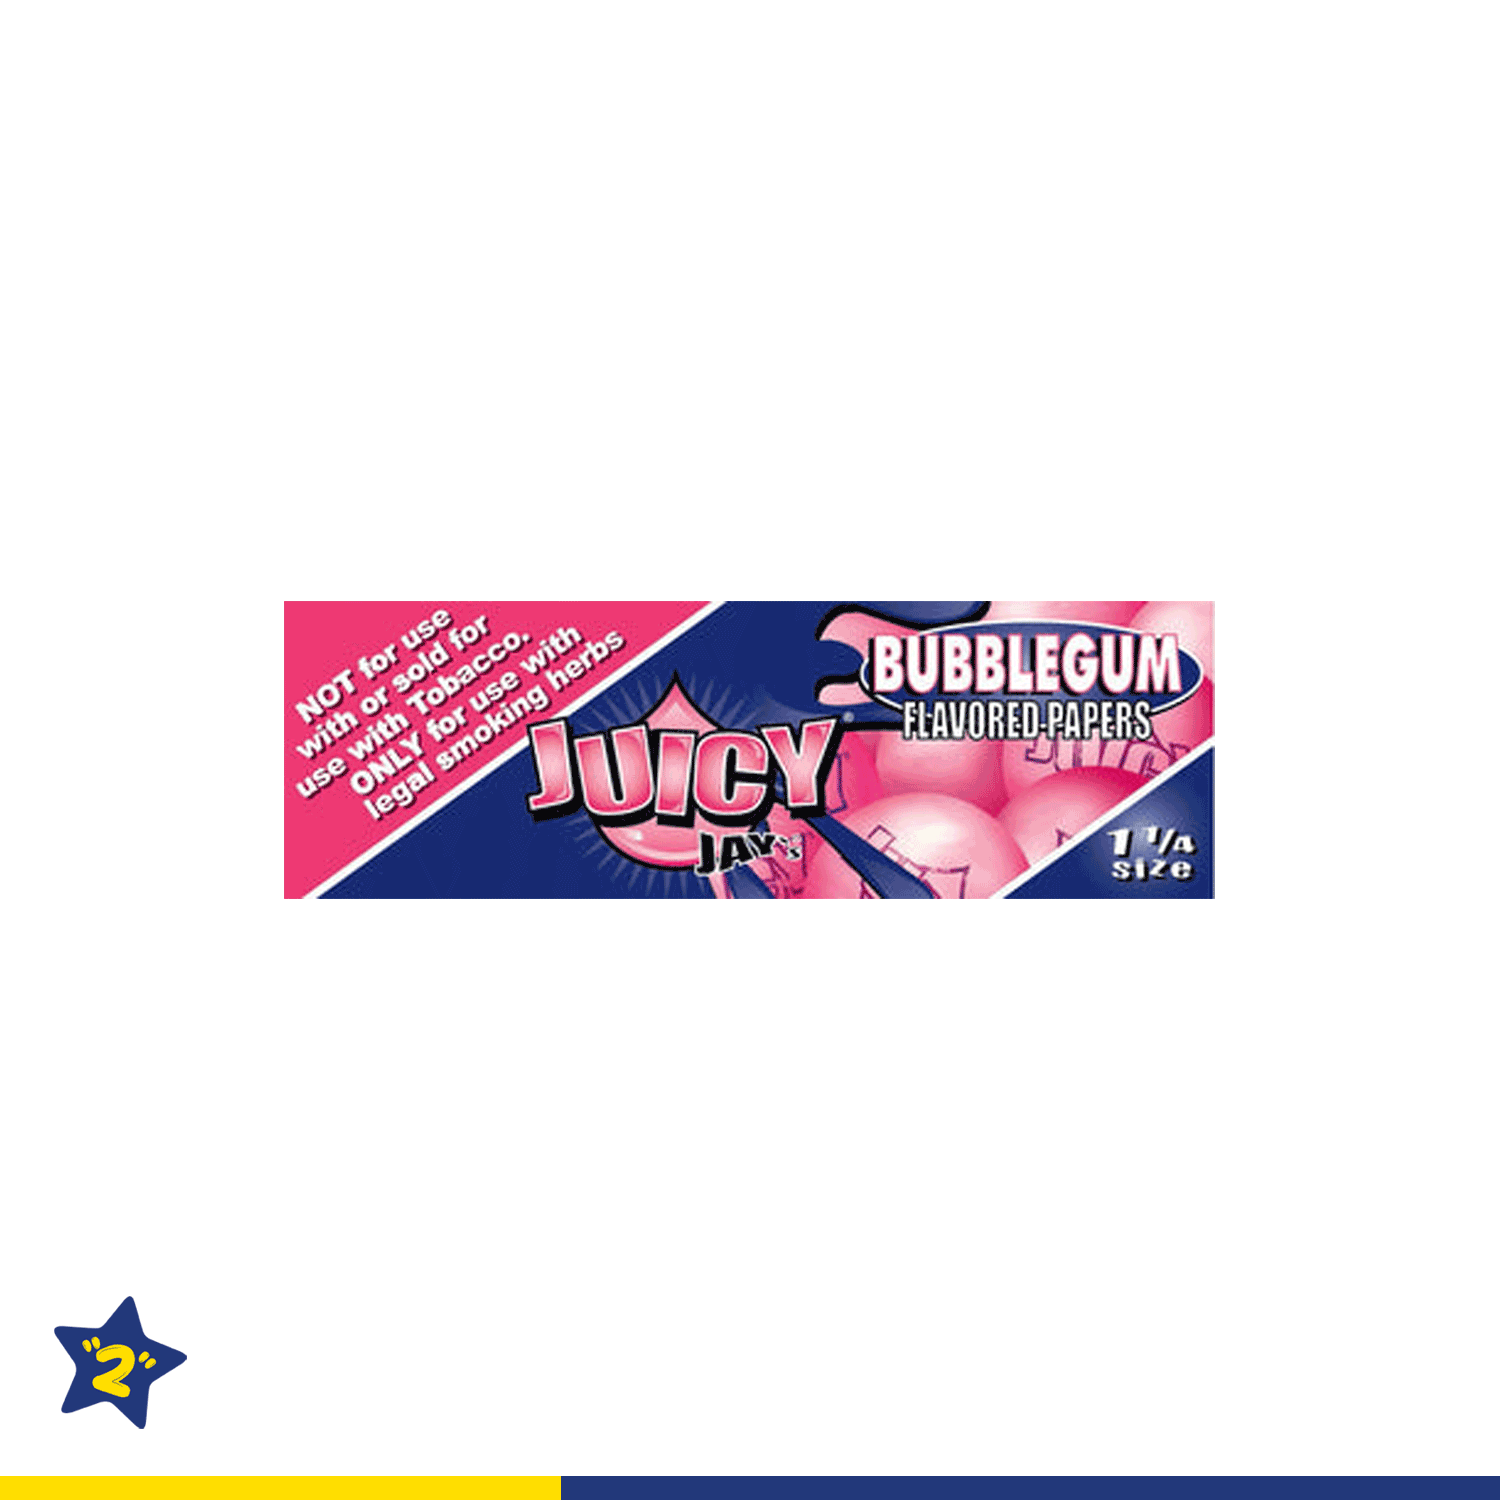 Juicy Jay's Flavored Bubblegum  Rolling Paper